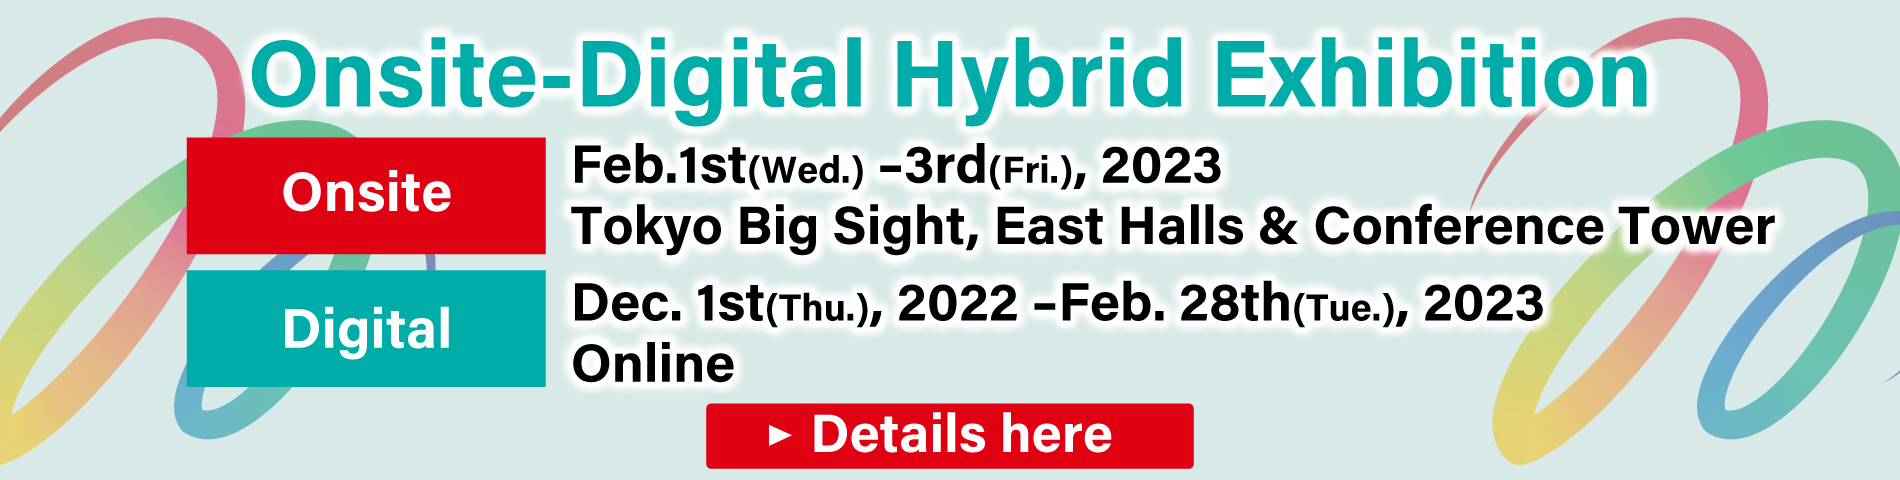 Onsite-Digital Hybrid Exhibition